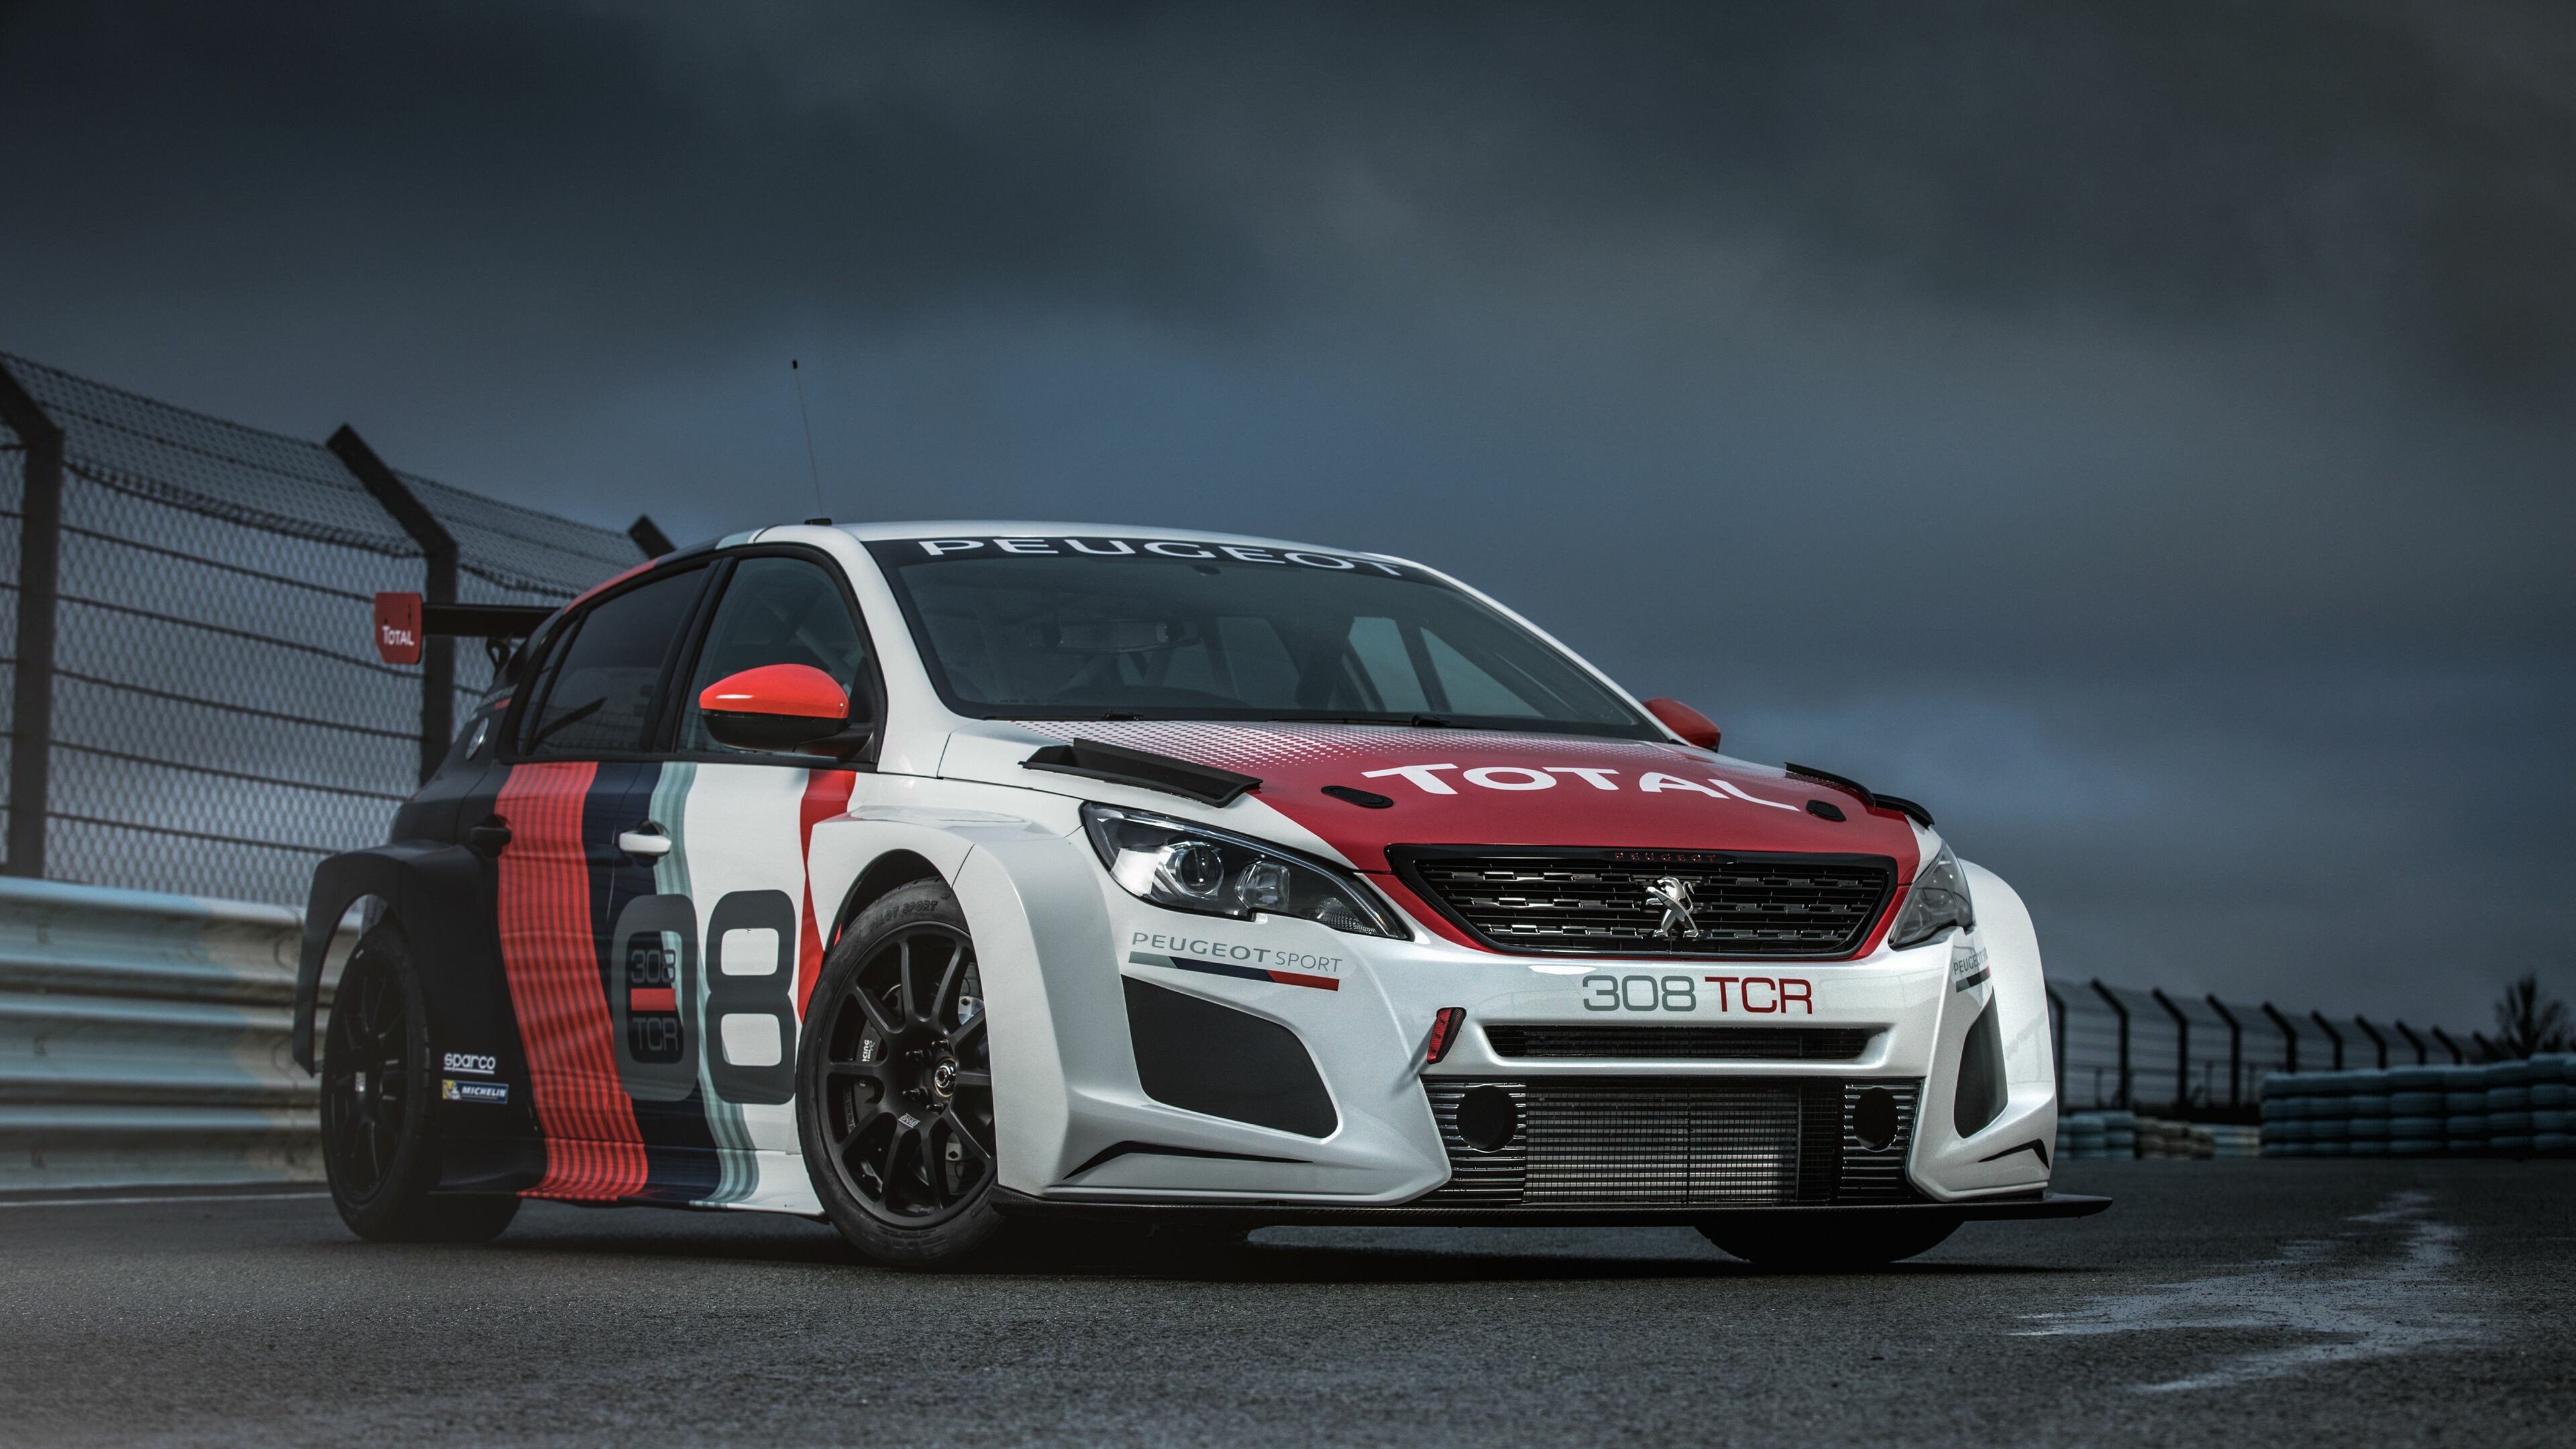 Peugeot: Model 308 TCR, 2018 cars, Sport car, Racing. 3840x2160 4K Background.